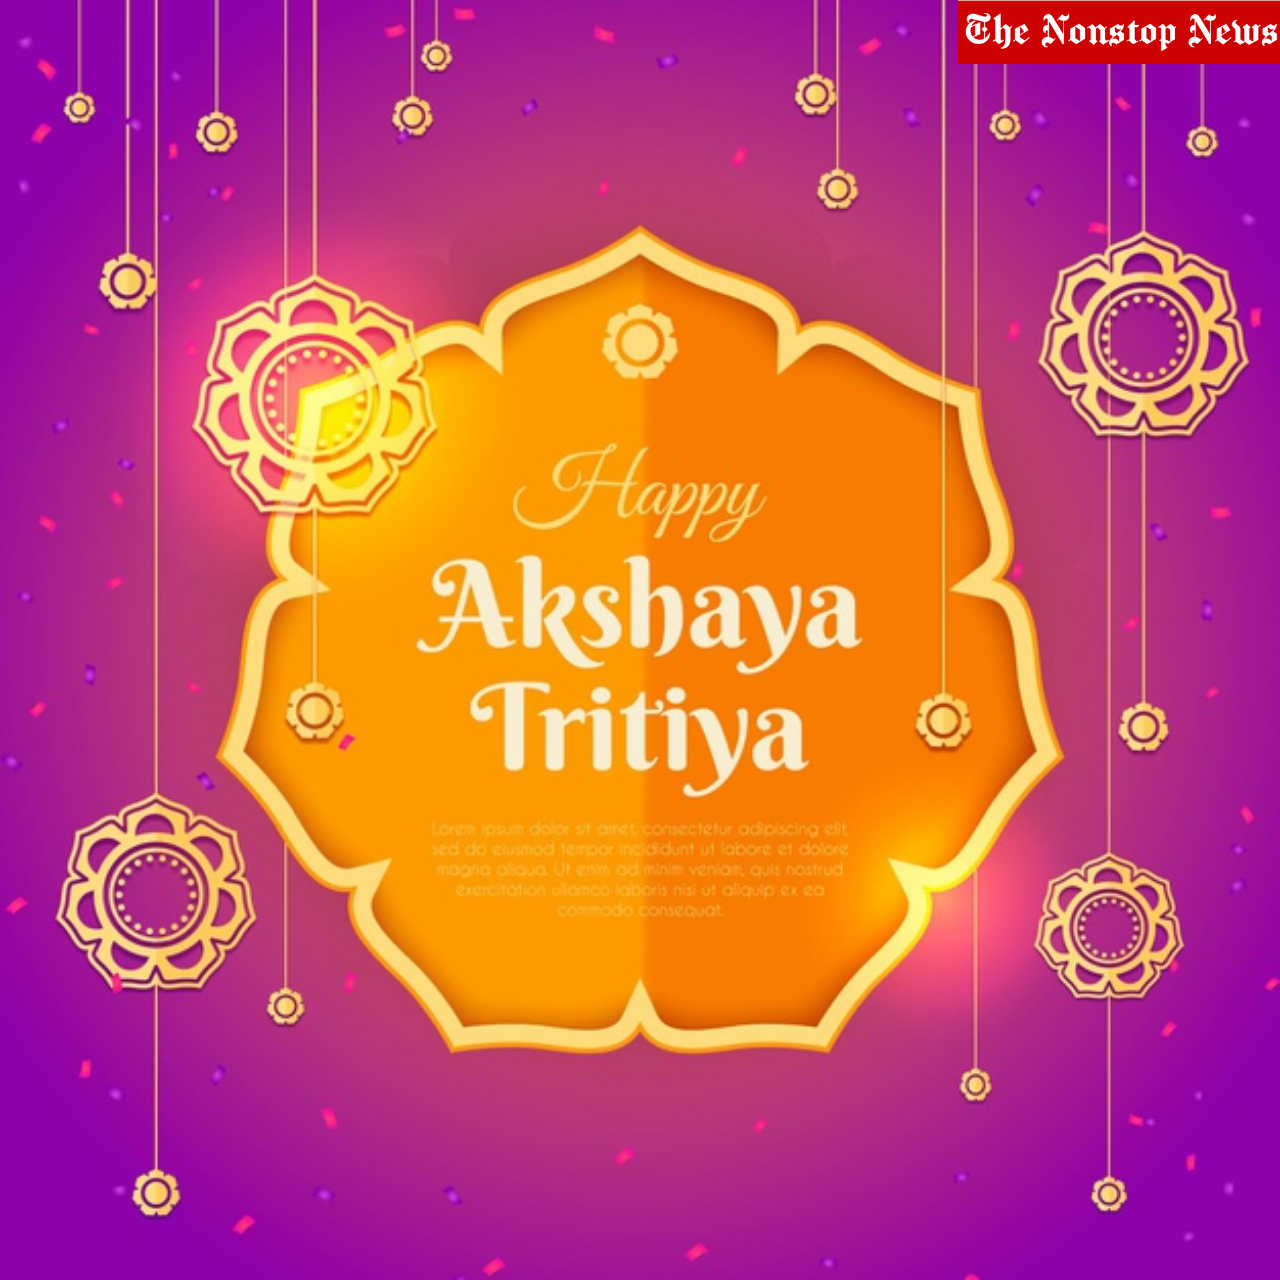 Akshaya Tritiya 2021 wishes, quotes, images, messages, and Whatsapp status to Share